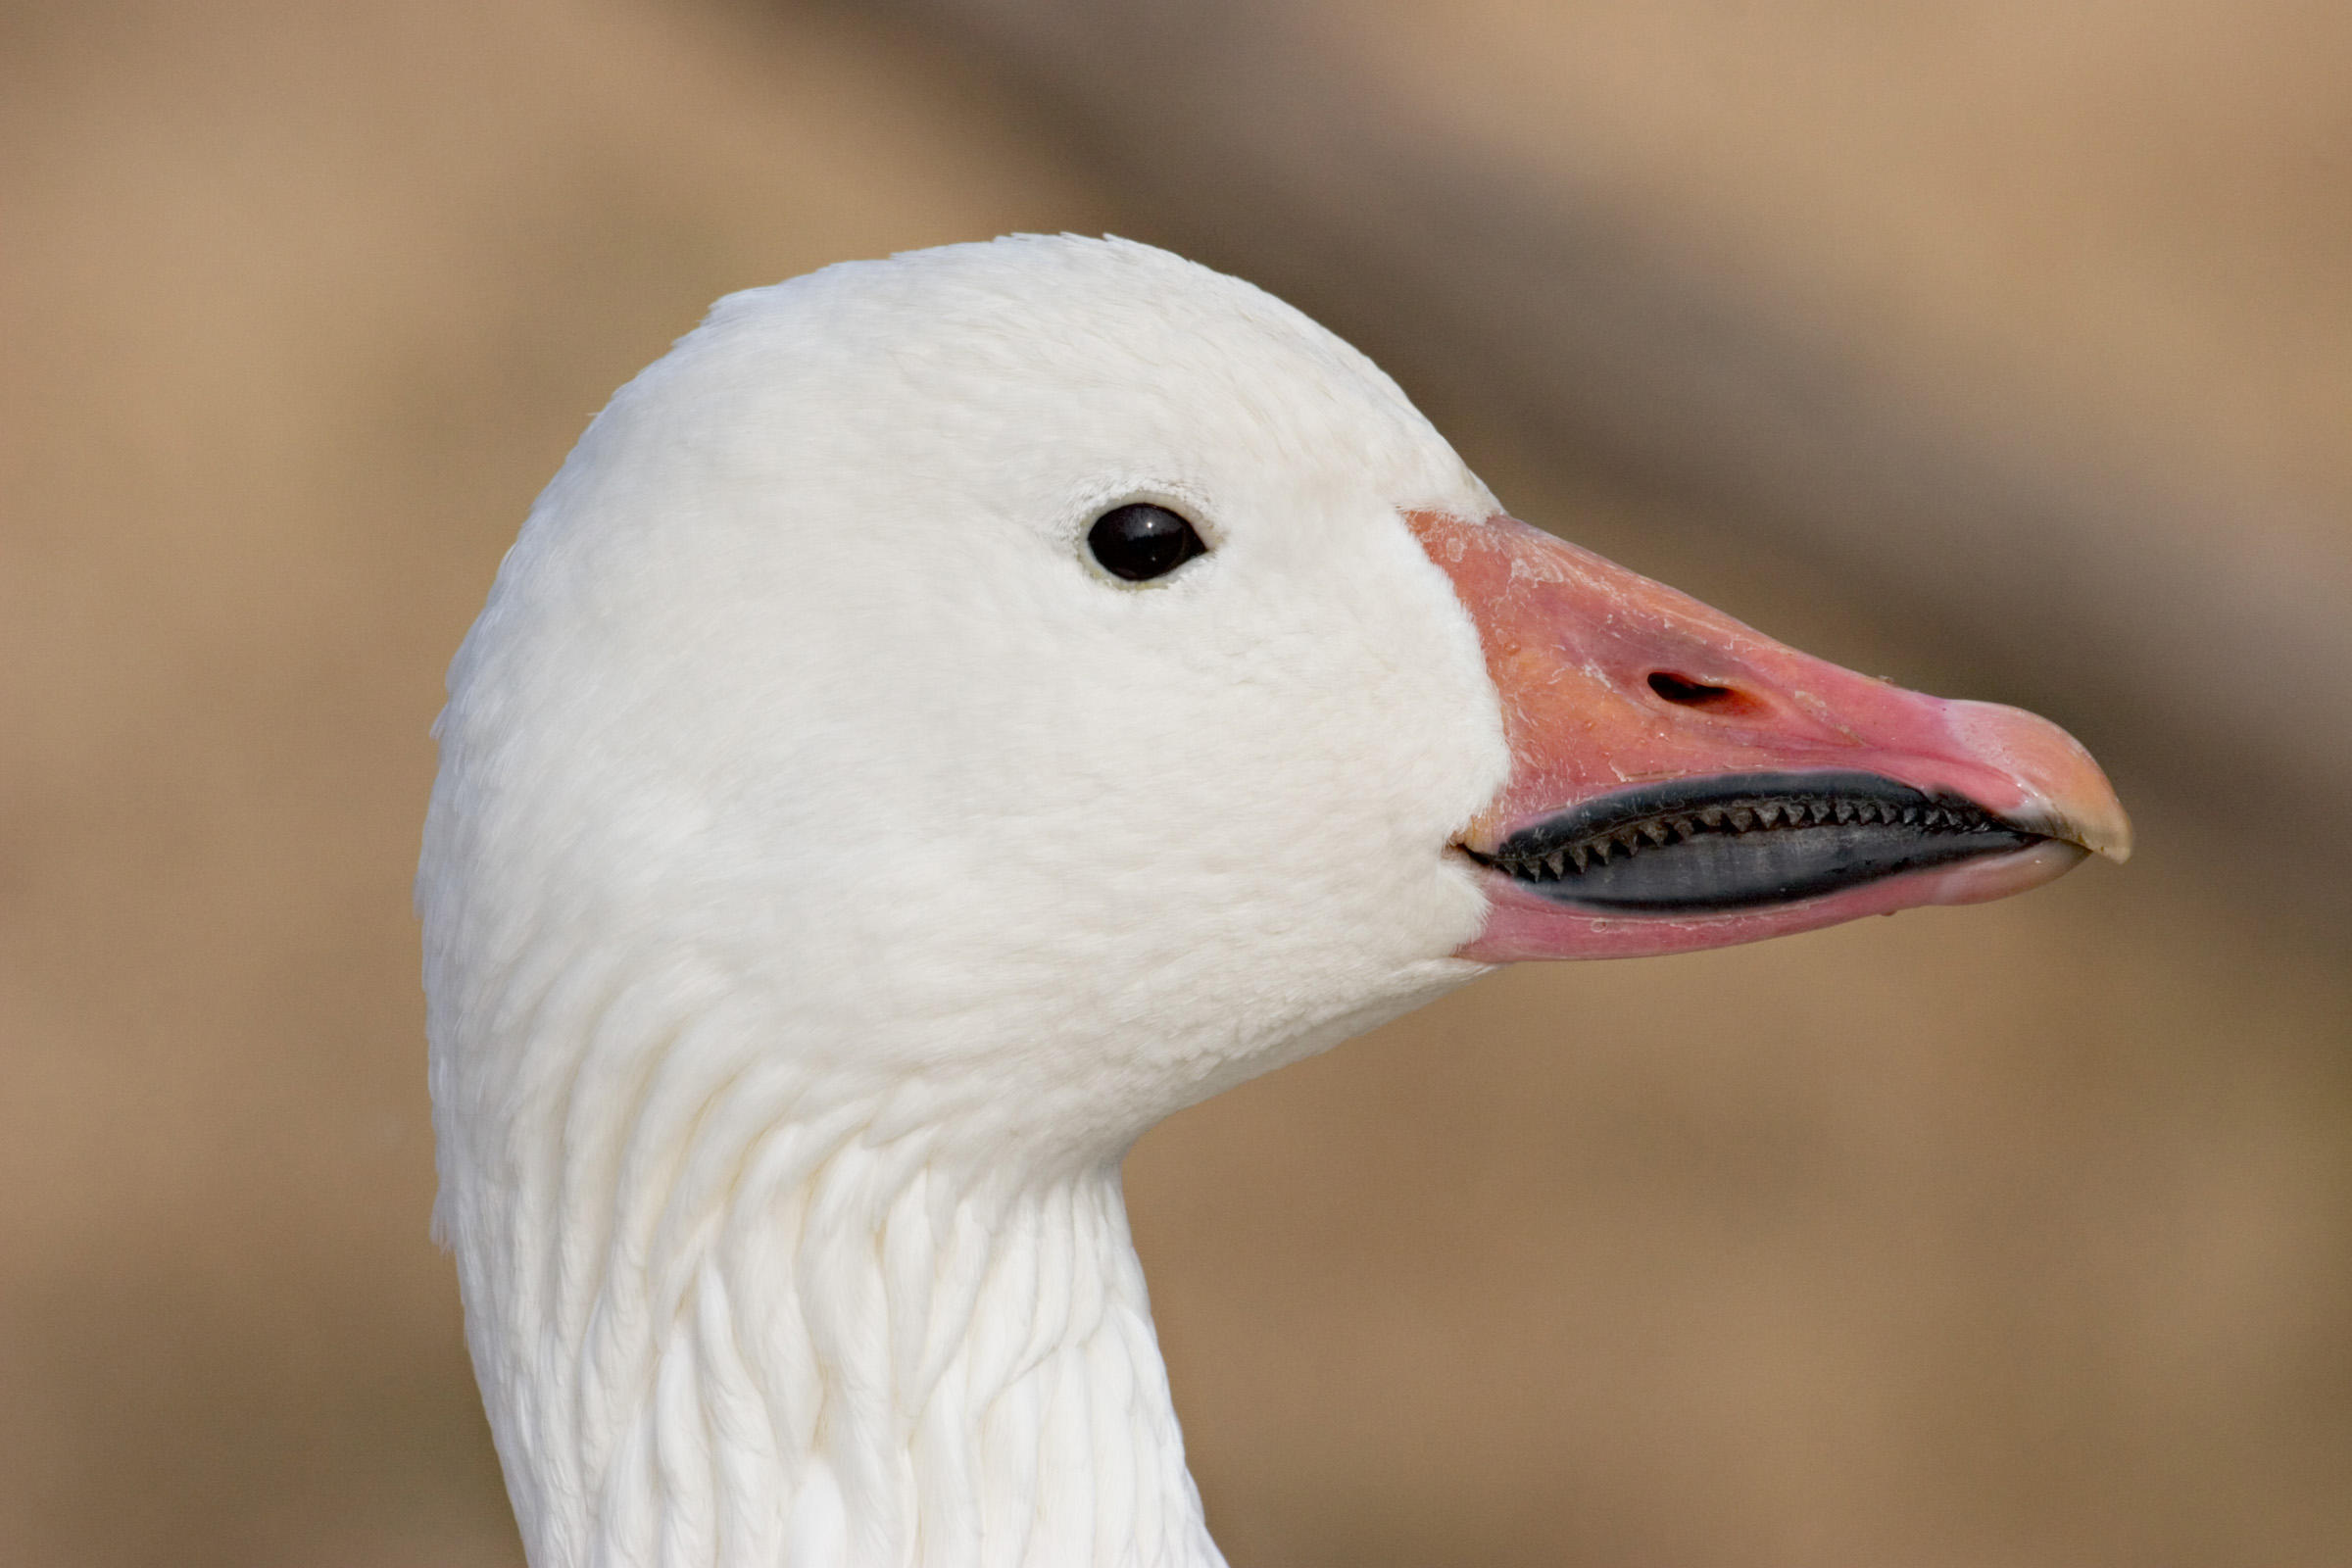 Snow Goose | Audubon Field Guide